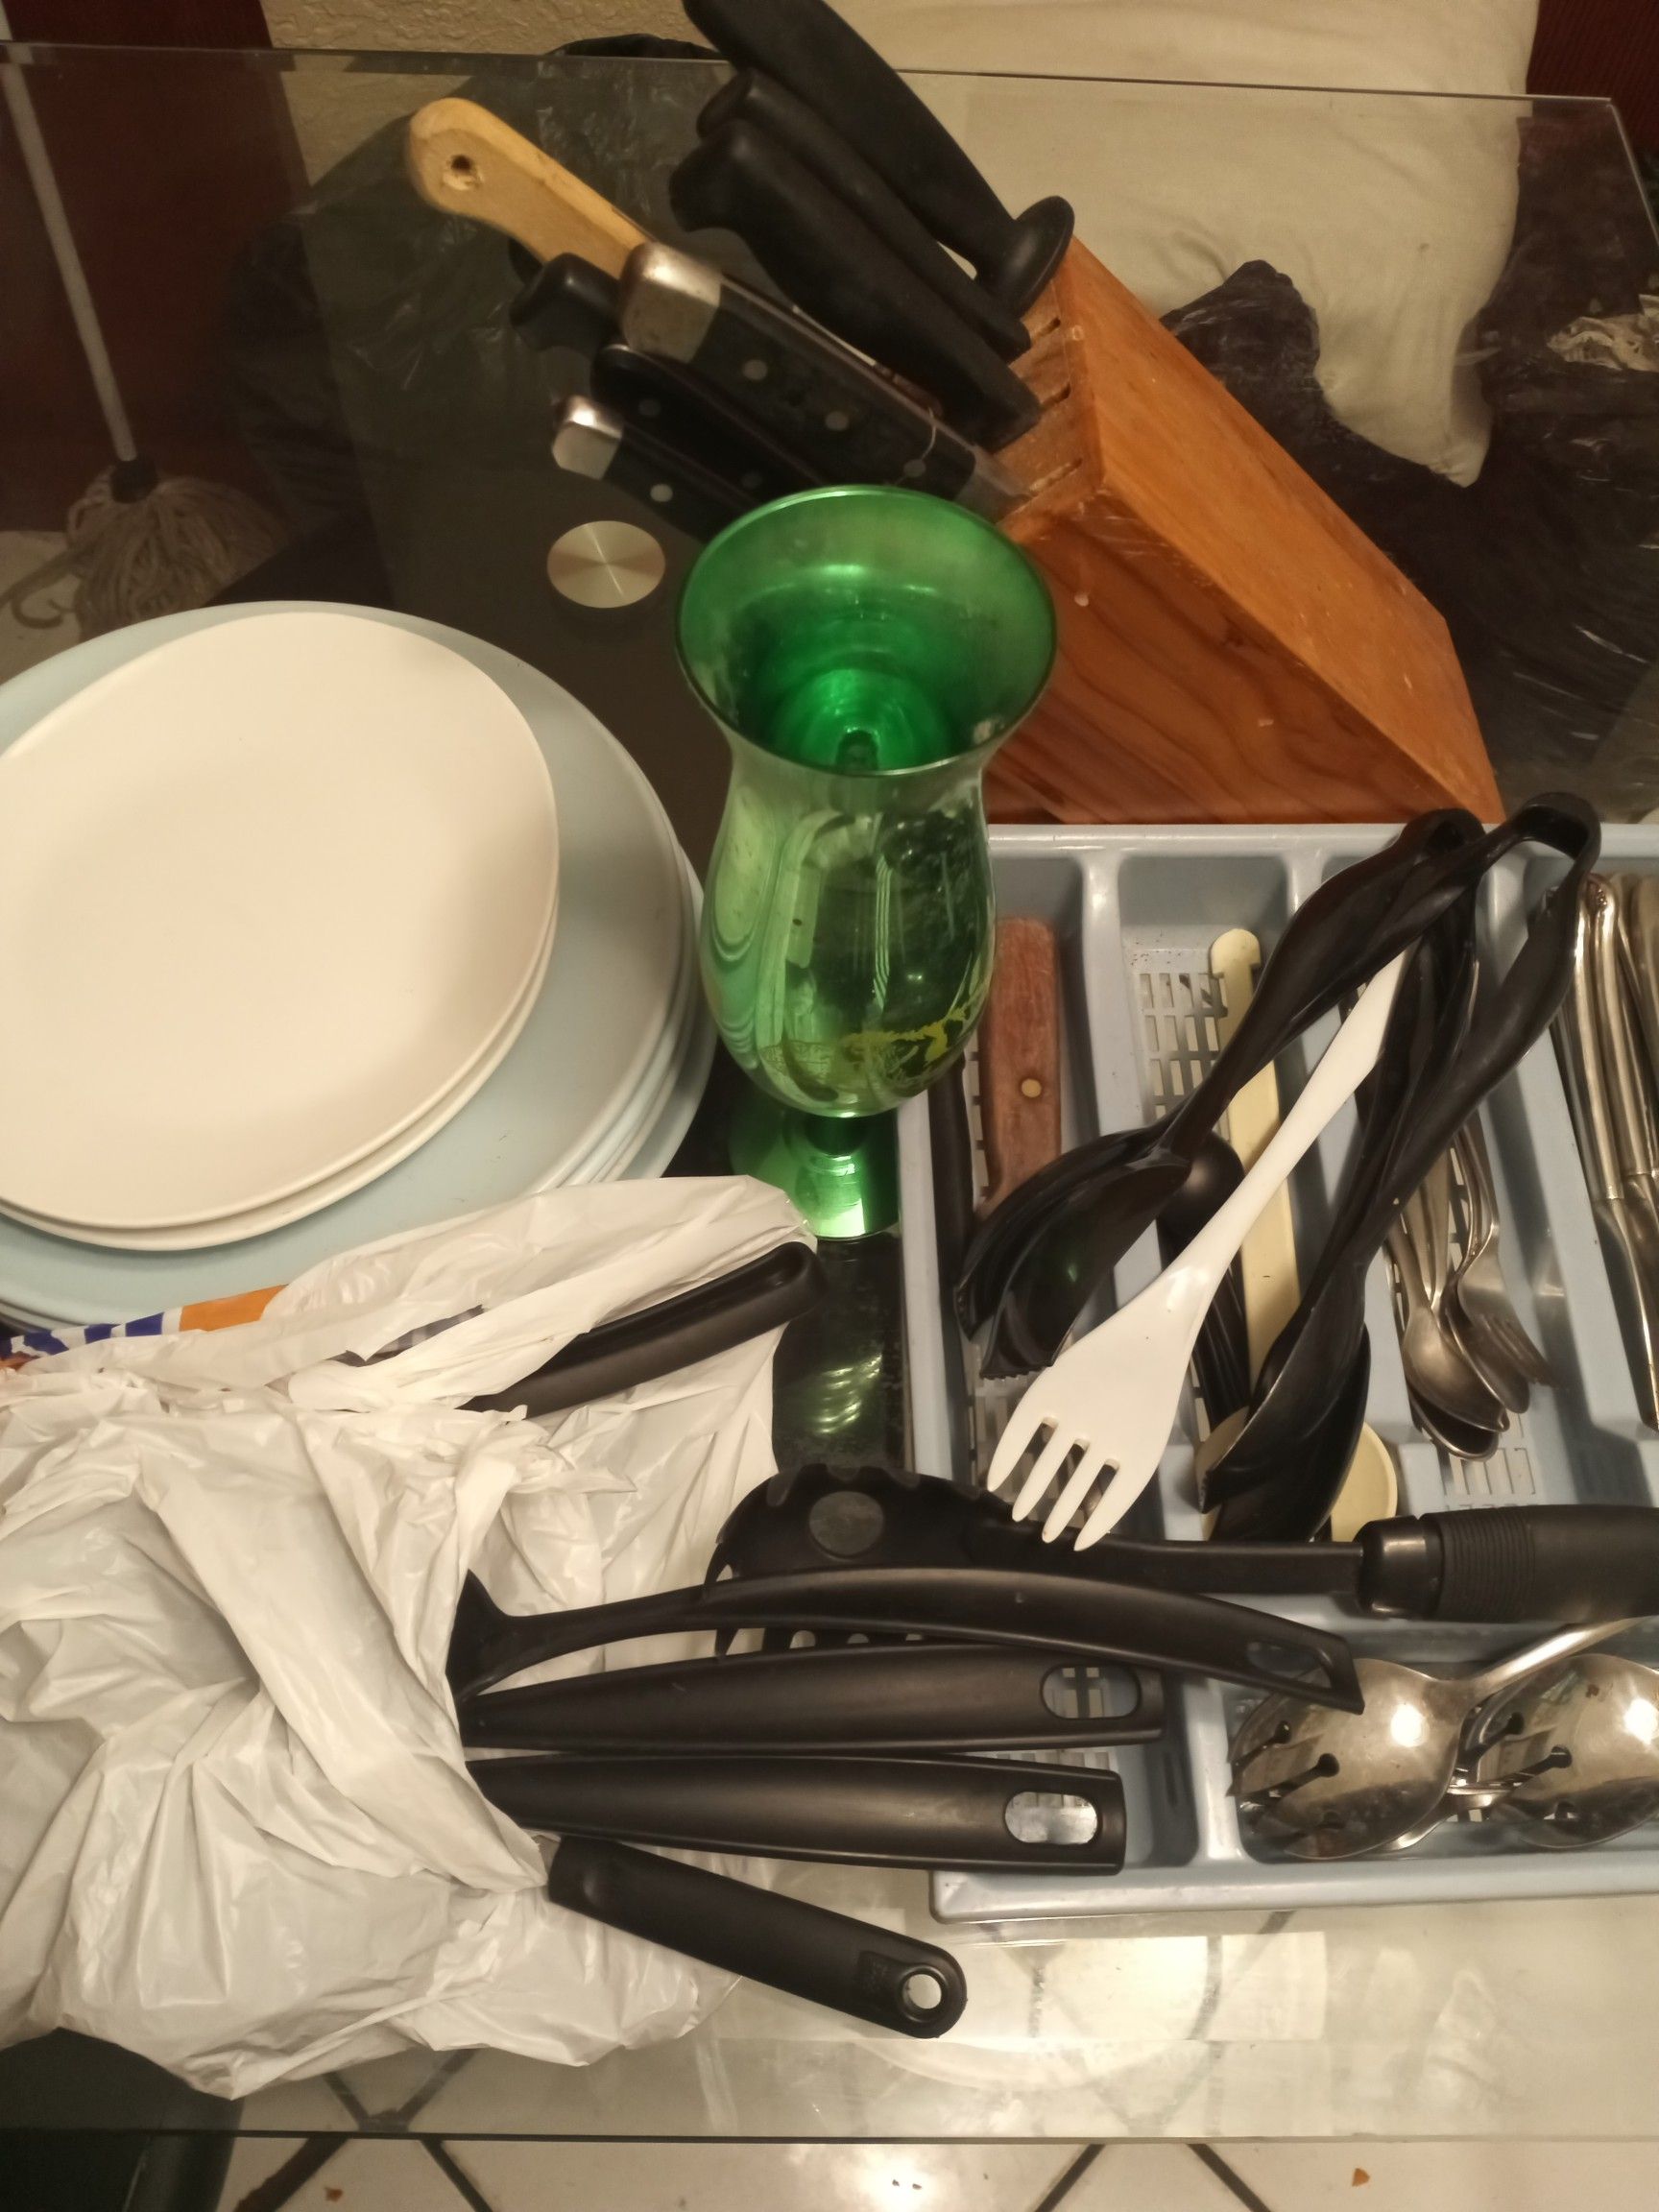 Assorted plates cooking utensils